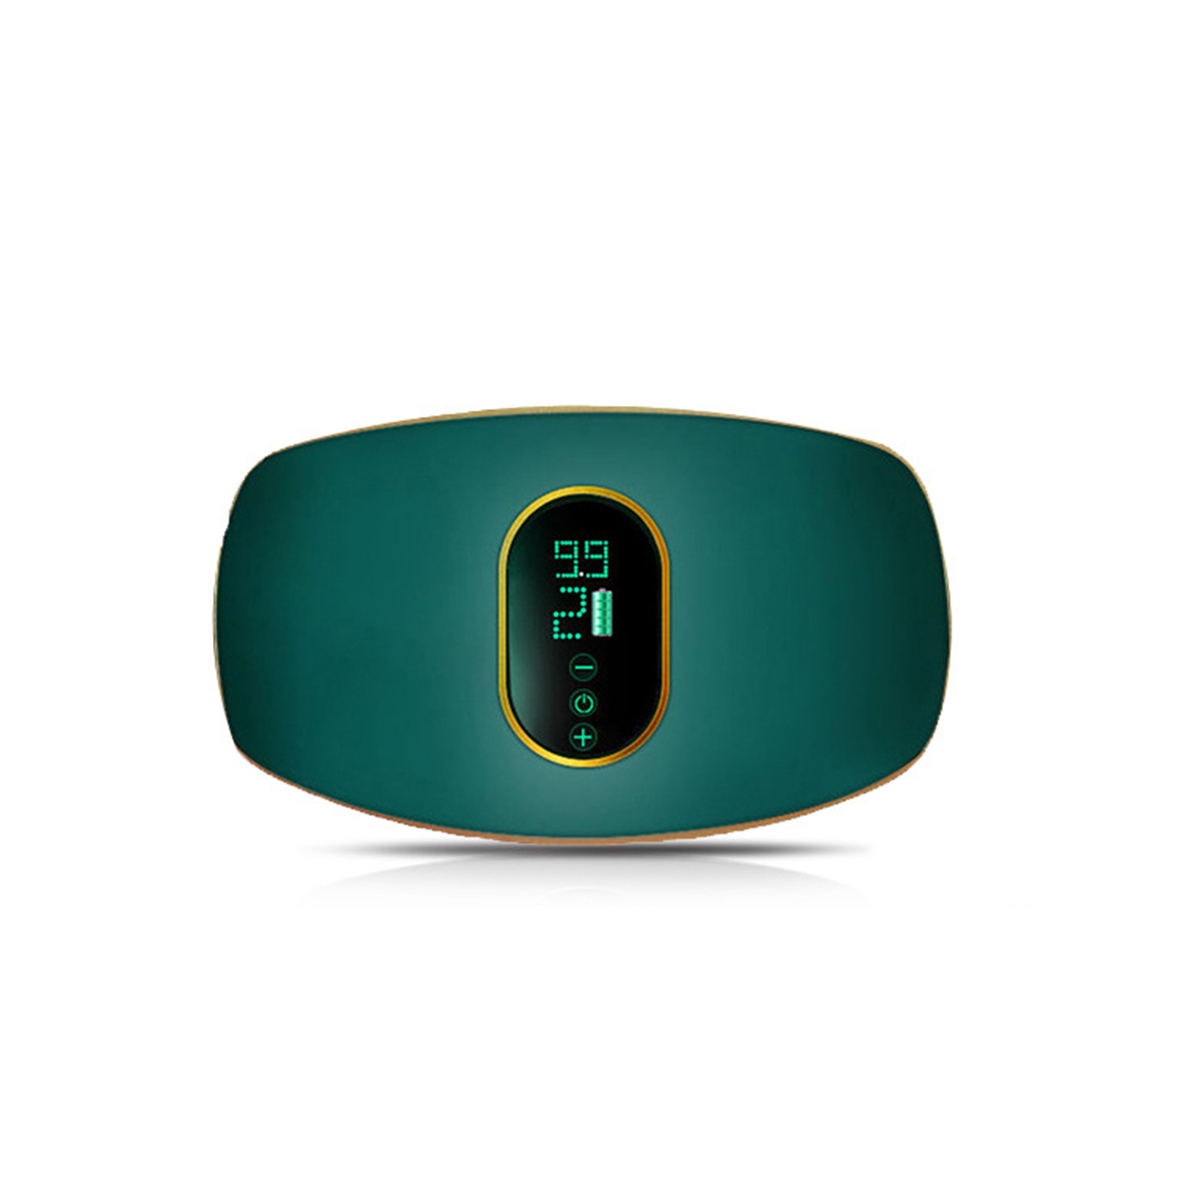 SHAOKE Massagegürtel-Fitnessgerät Massagegerät USB-Aufladung 3 gleichmäßige Massage Modi